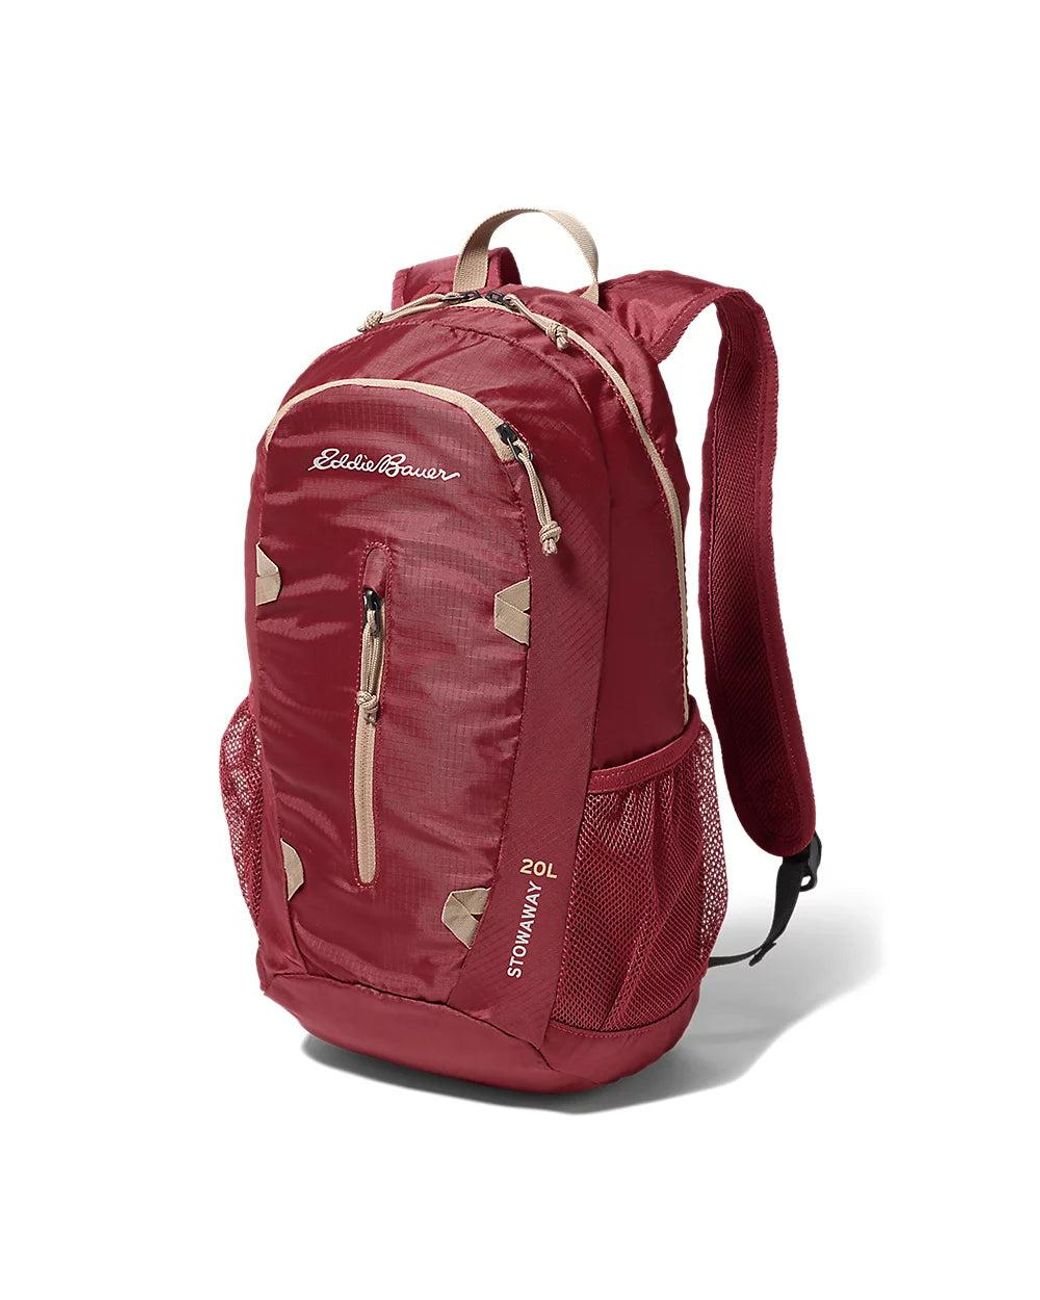 Eddie Bauer Stowaway Packable 20l Backpack in Red | Lyst